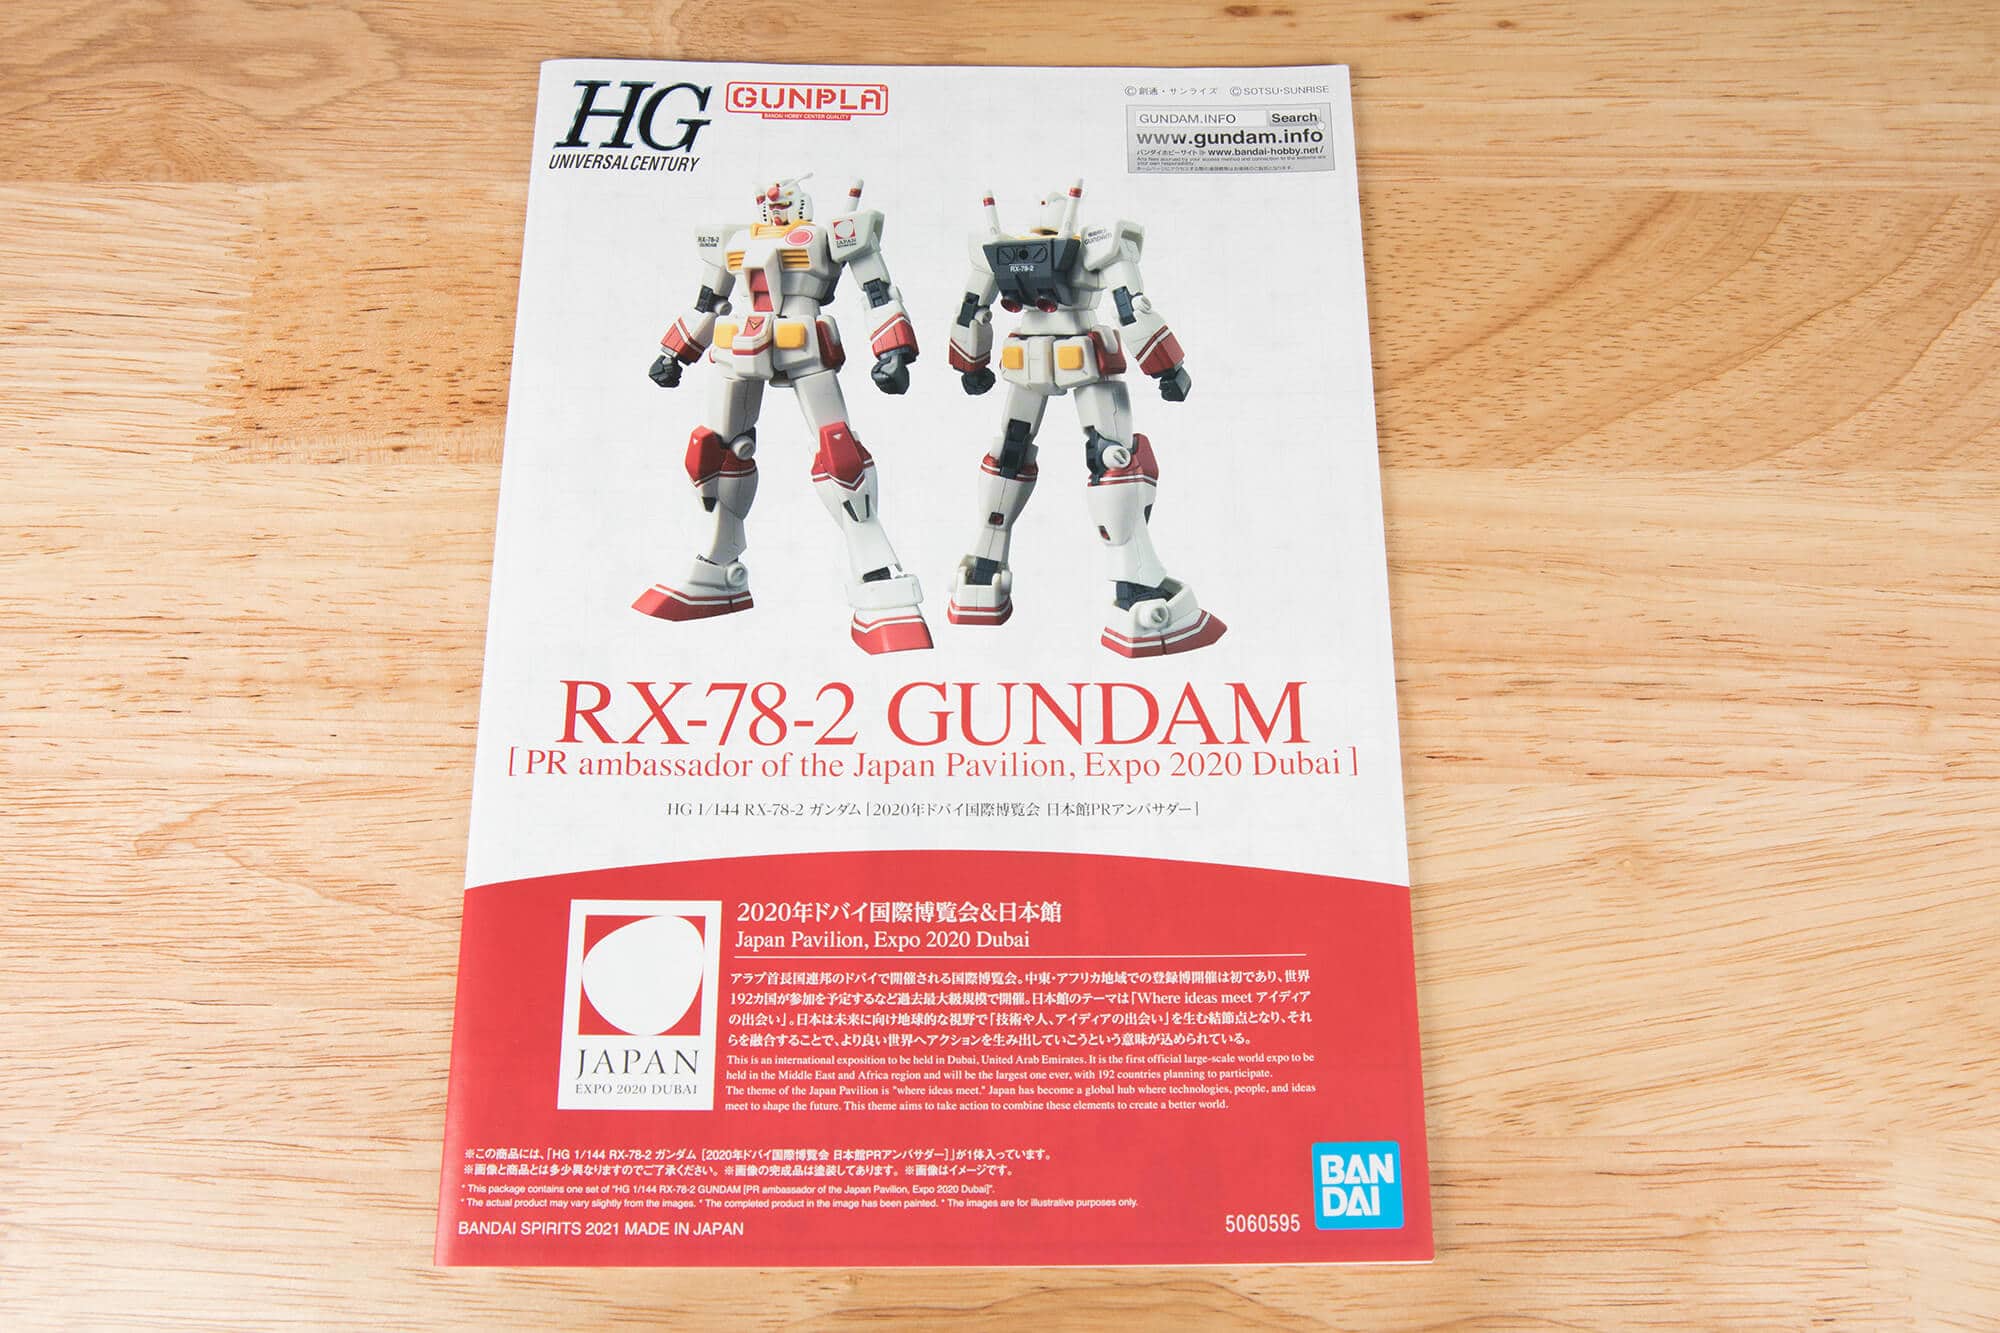 HG RX-78-2 Gundam [PR ambassador of the Japan Pavilion, Expo 2020 Dubai] Gundam Model Kit Instructions